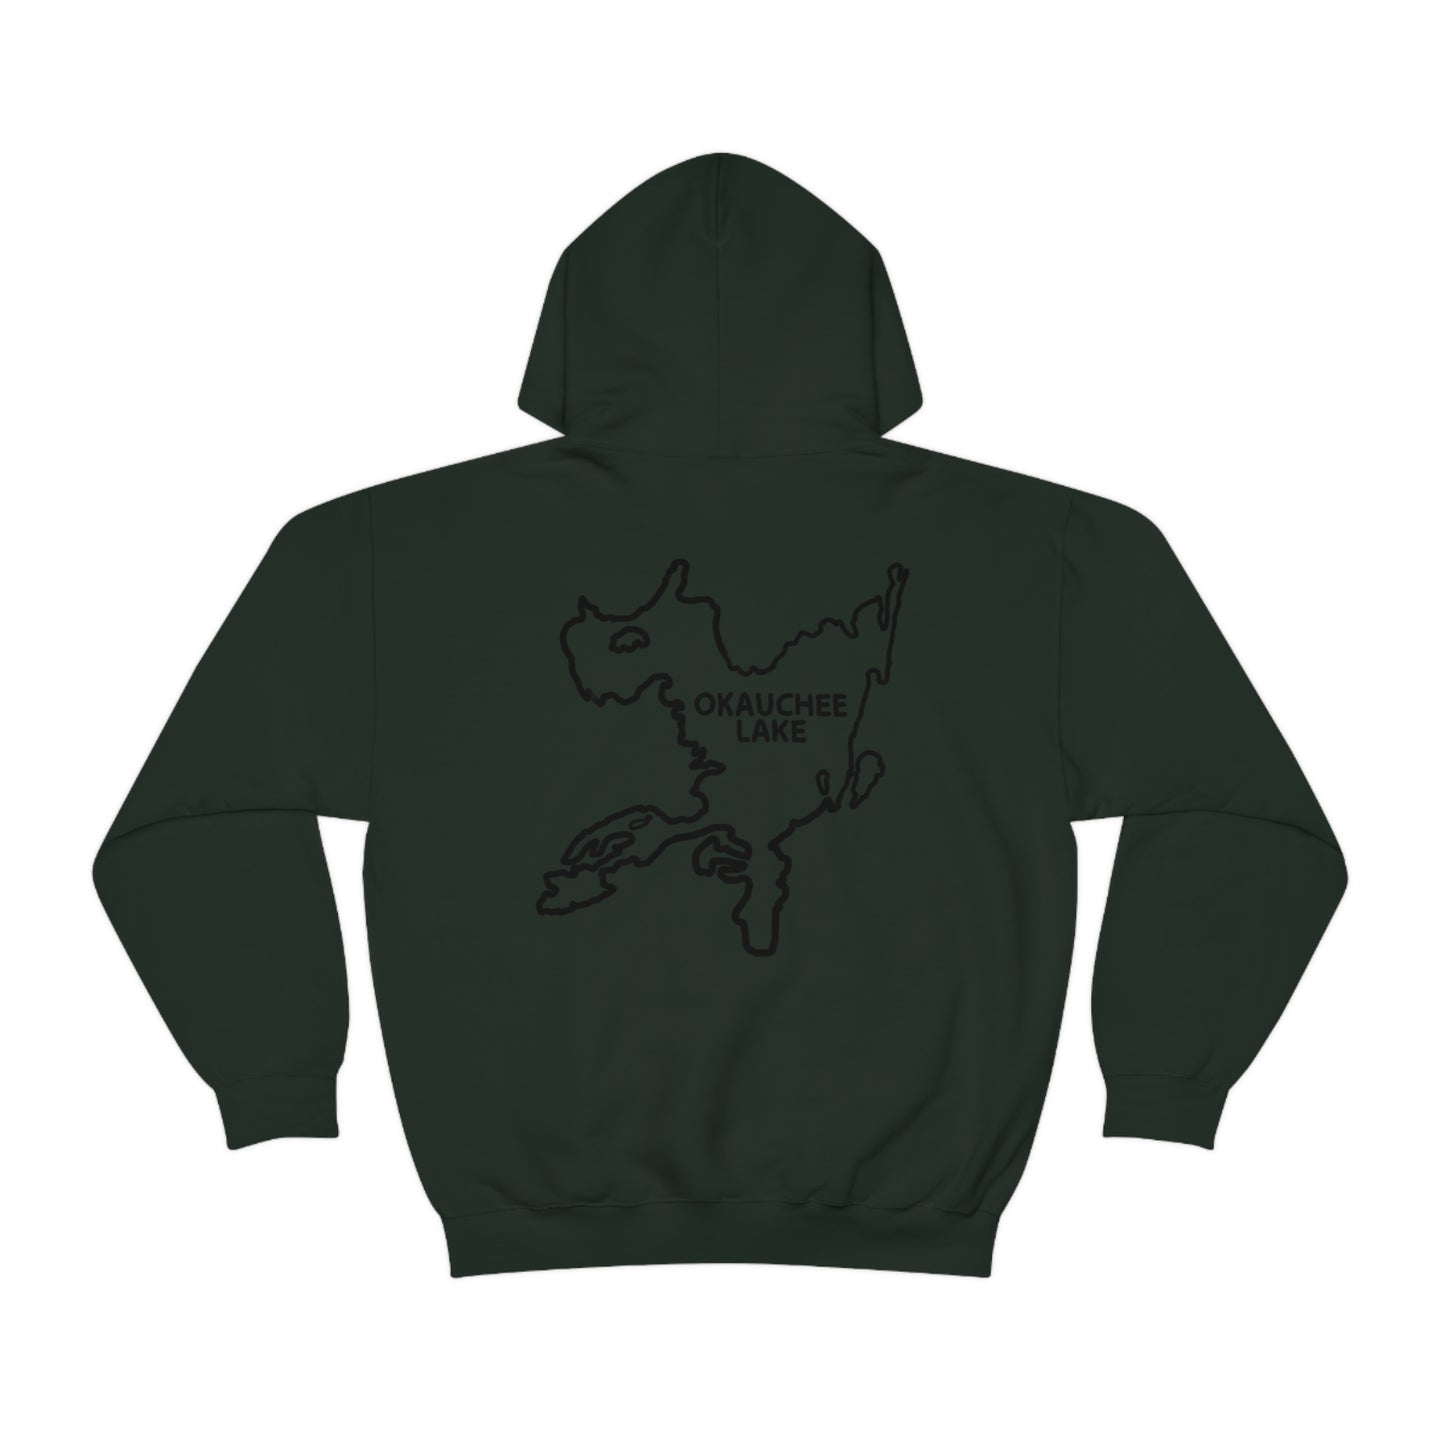 Okauchee Lake, Falling Off Standup Jetski - Unisex Heavy Blend Hooded Sweatshirt